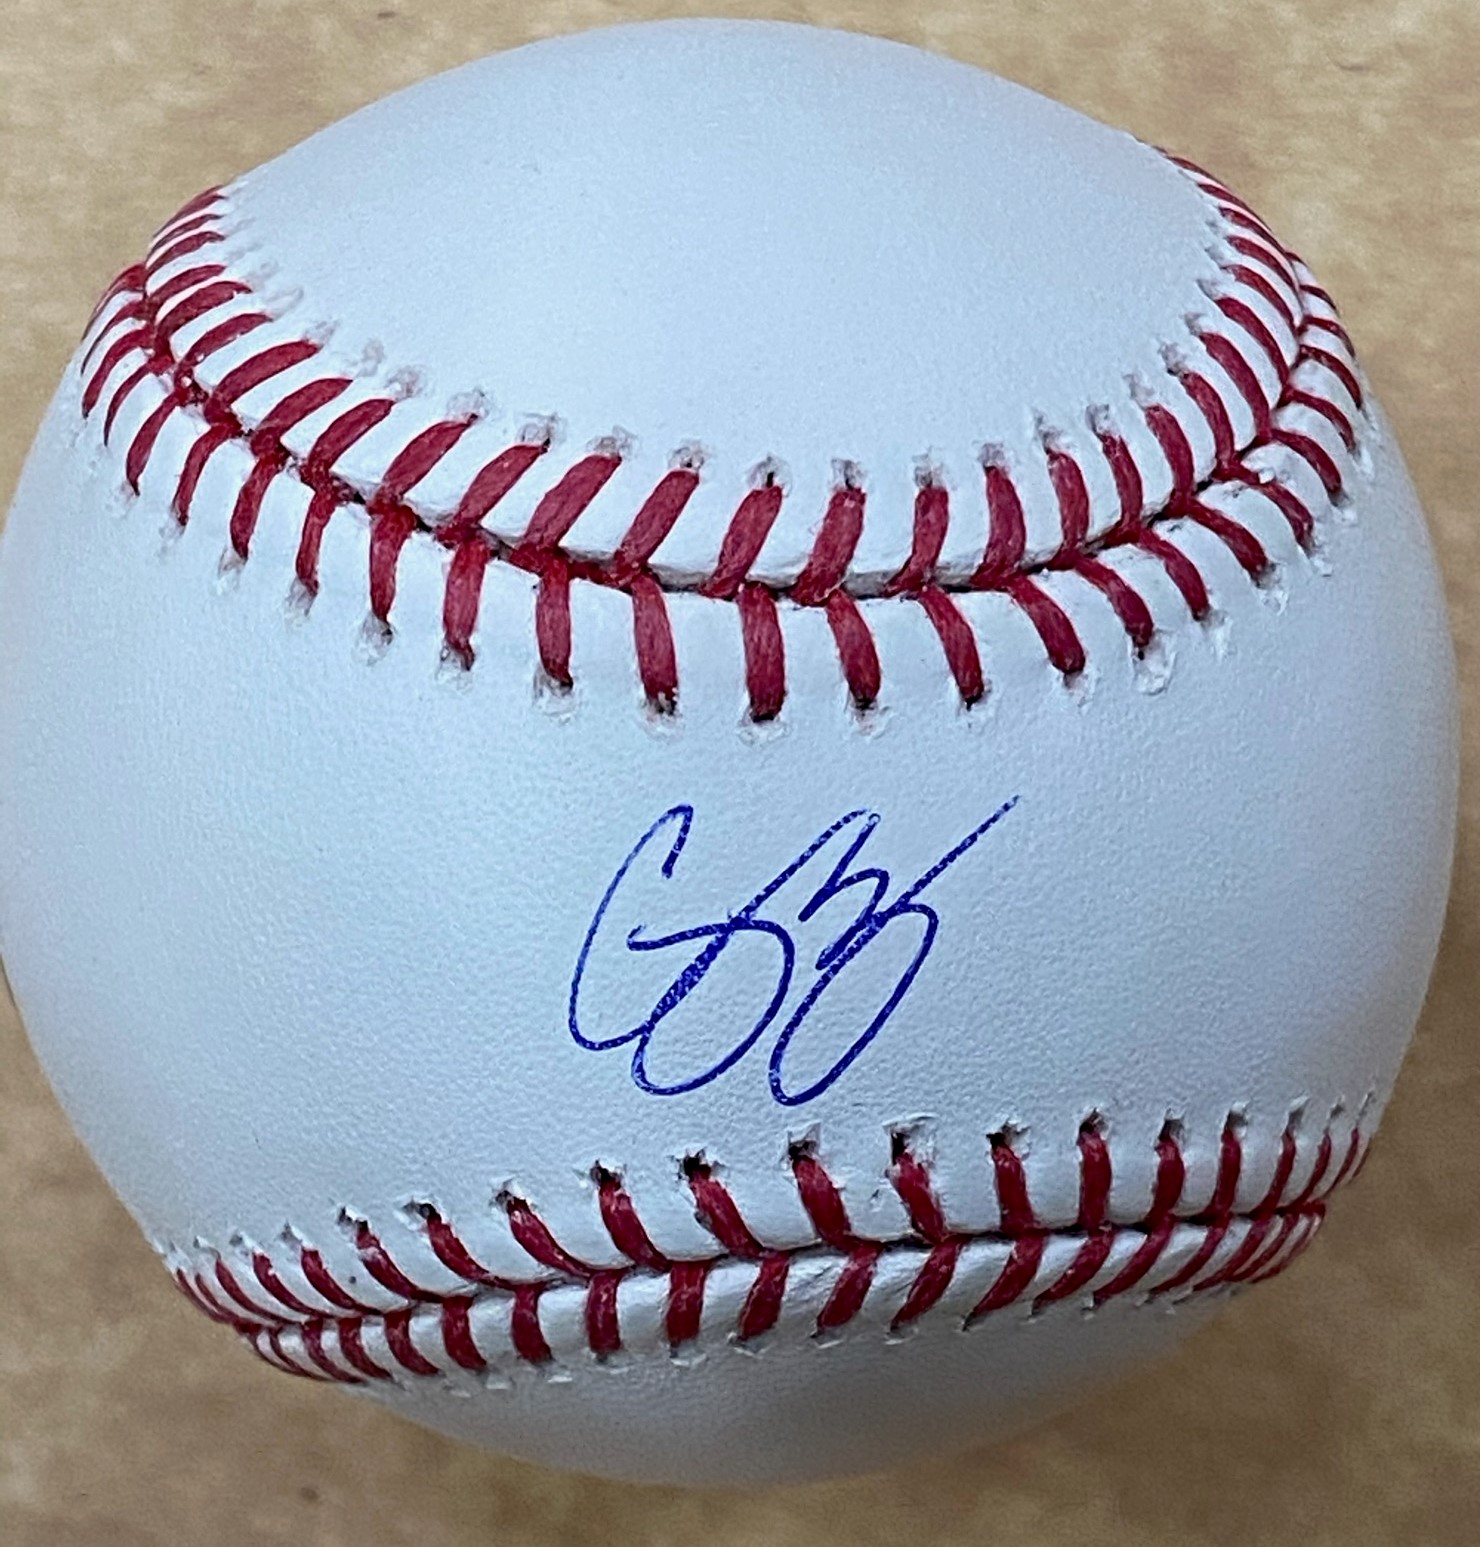 Corey Seager Autographed Baseball